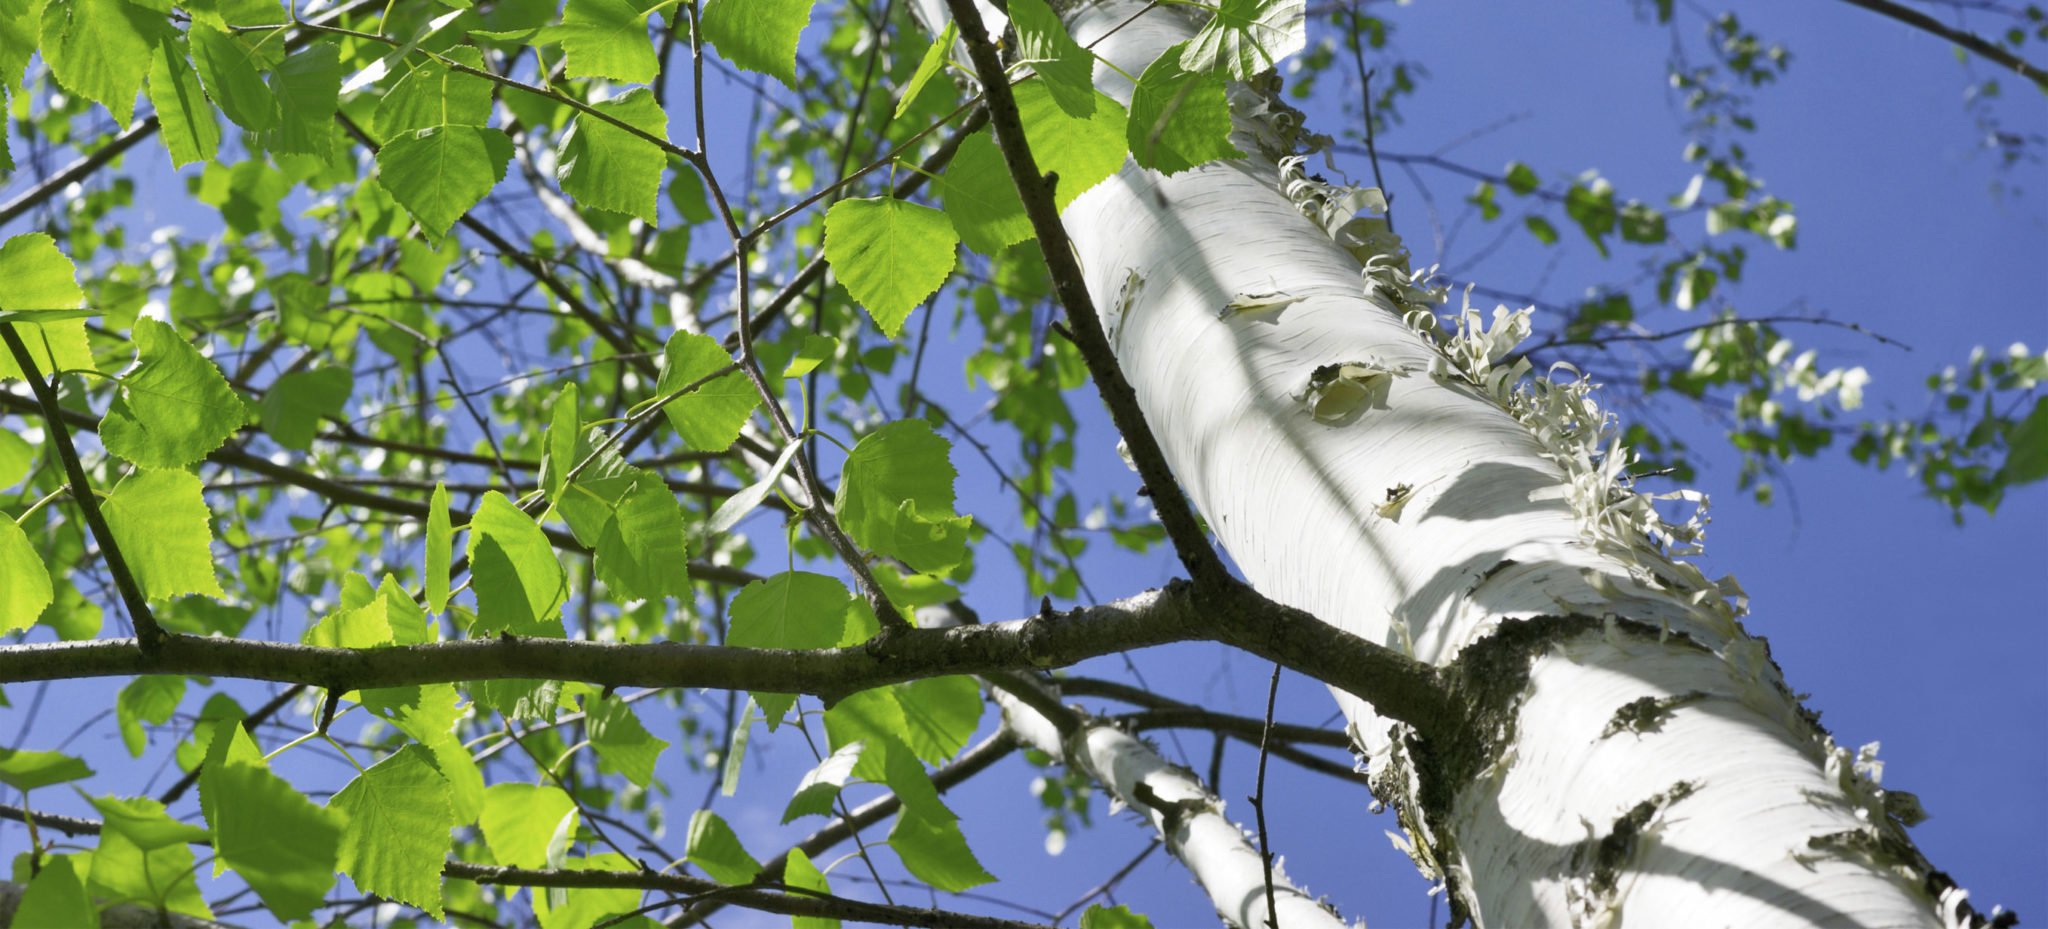 White paper birch tree with lush green foliage.